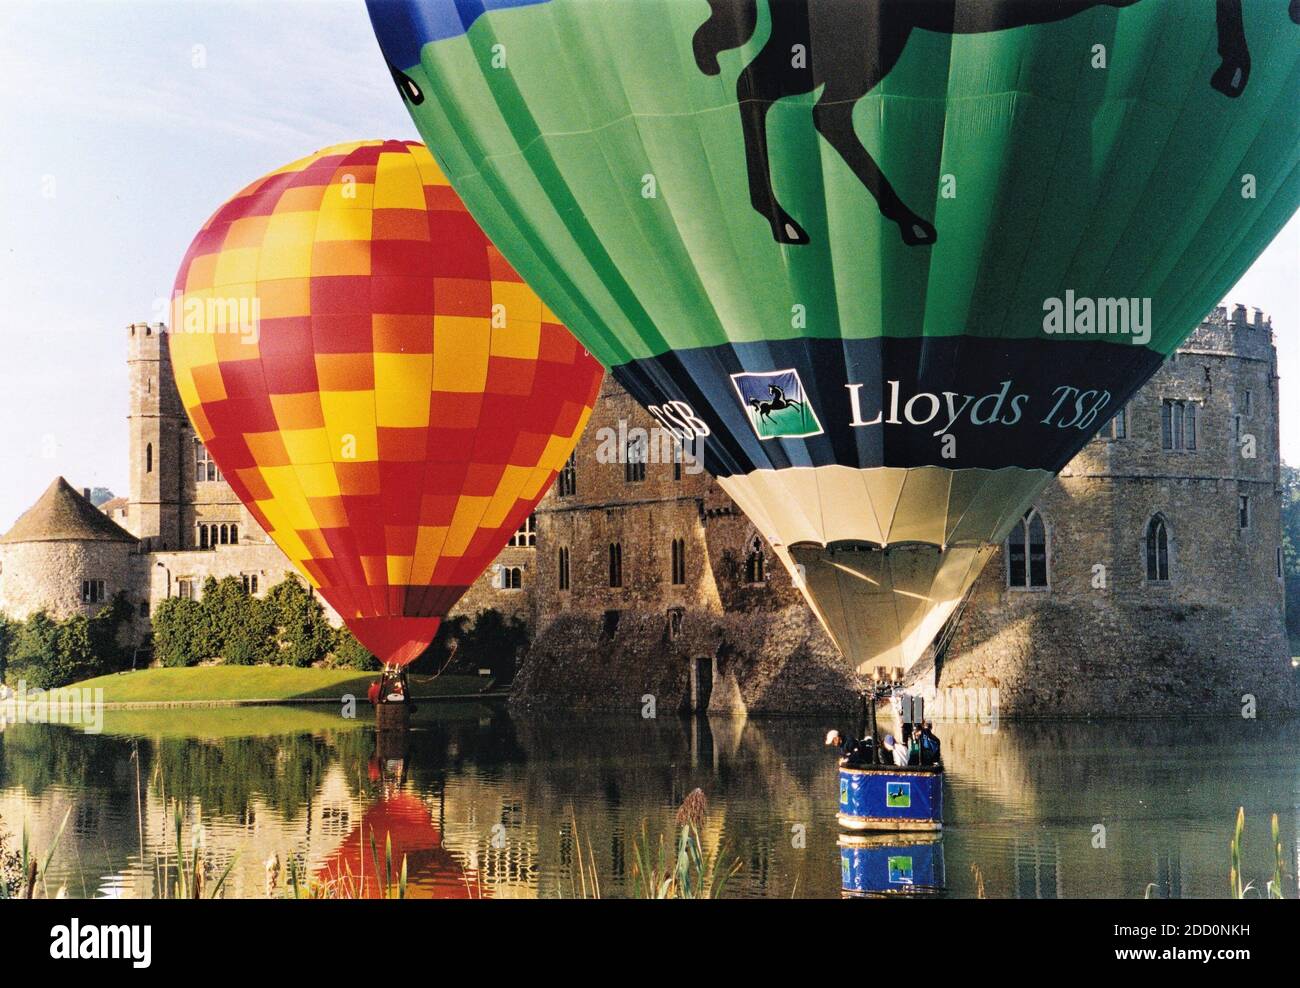 "Leeds Castle hot air balloons", "Leeds Castle balloon flight", "Balloon immersione in mongolfiera", "Reflections", "volo", "volo in mongolfiera" Foto Stock